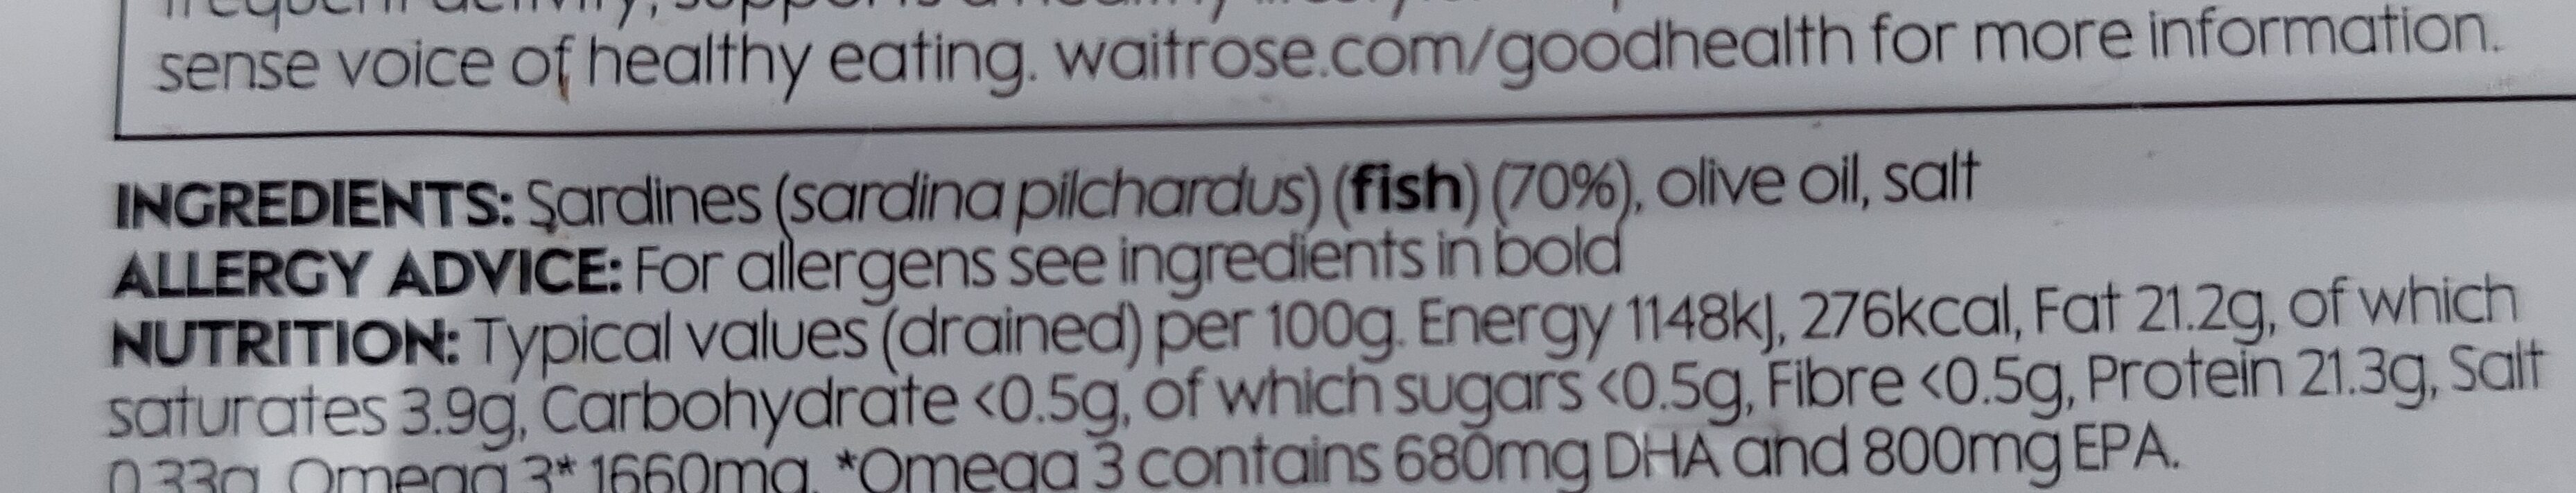 Waitrose sardines in olive oil - Ingredients